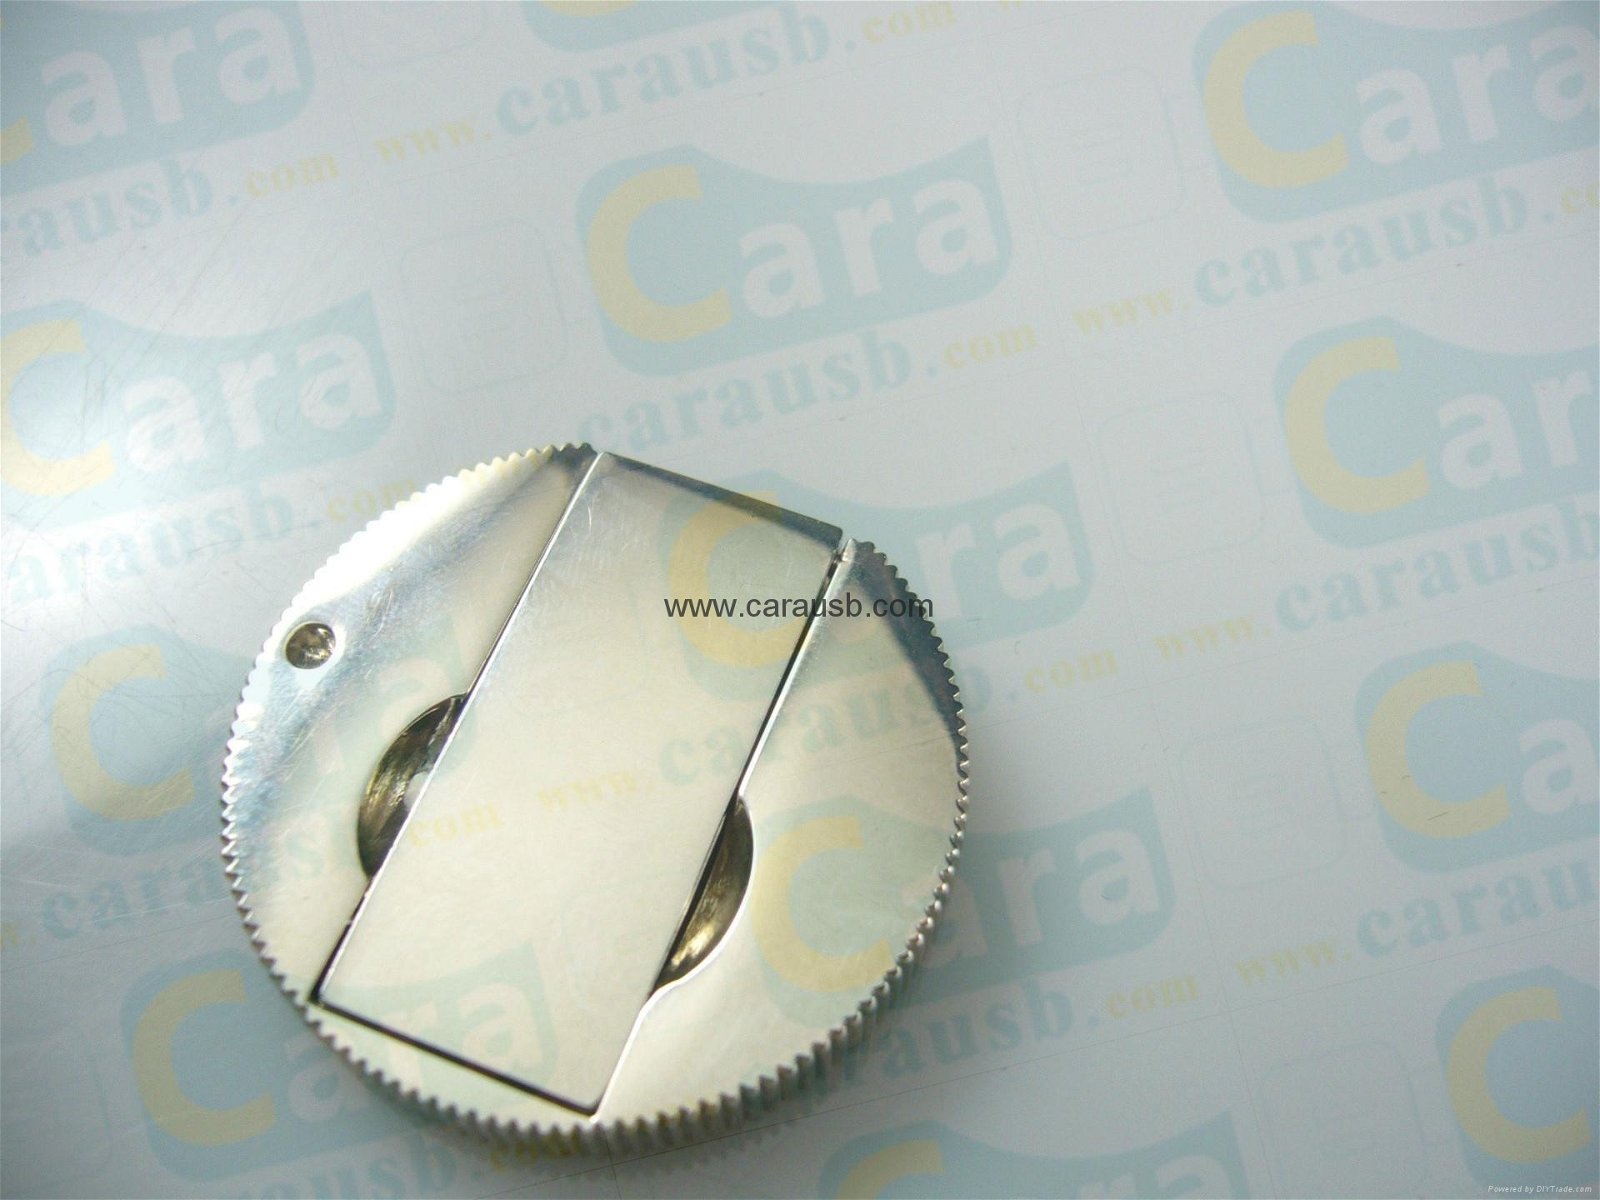 CaraUSB help Hemple customize circle round coin mini metal usb sticks 4G folding 4